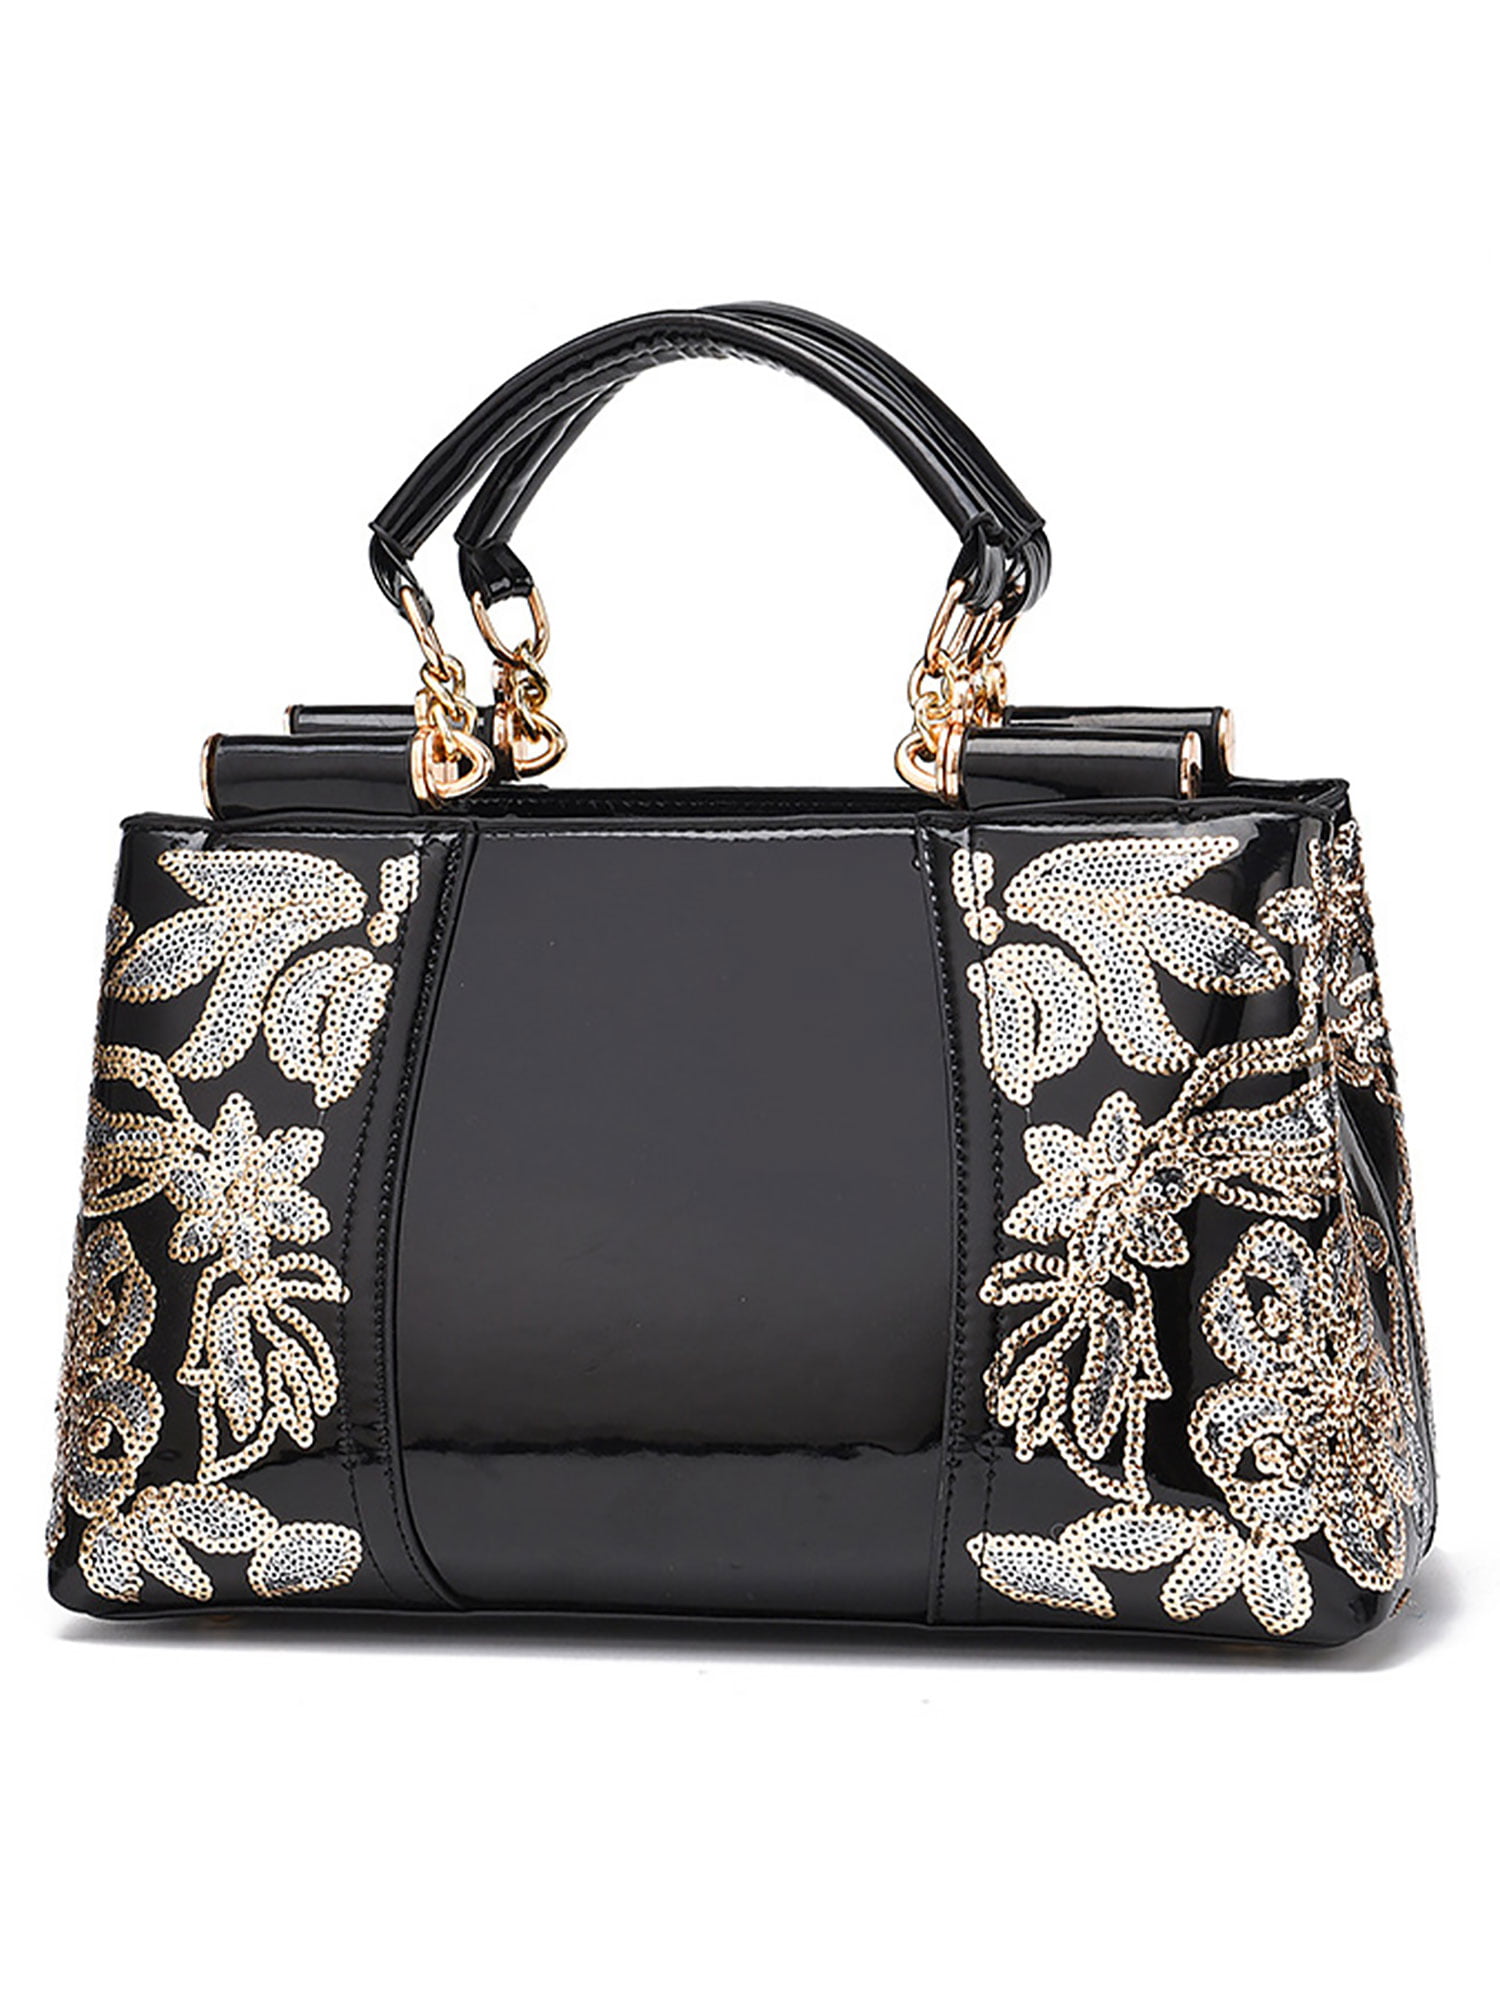 Tecing Black Designer Purses Satchel Handbags for Women PU Leather Shoulder Bags Multiple Pockets Work Fashion 